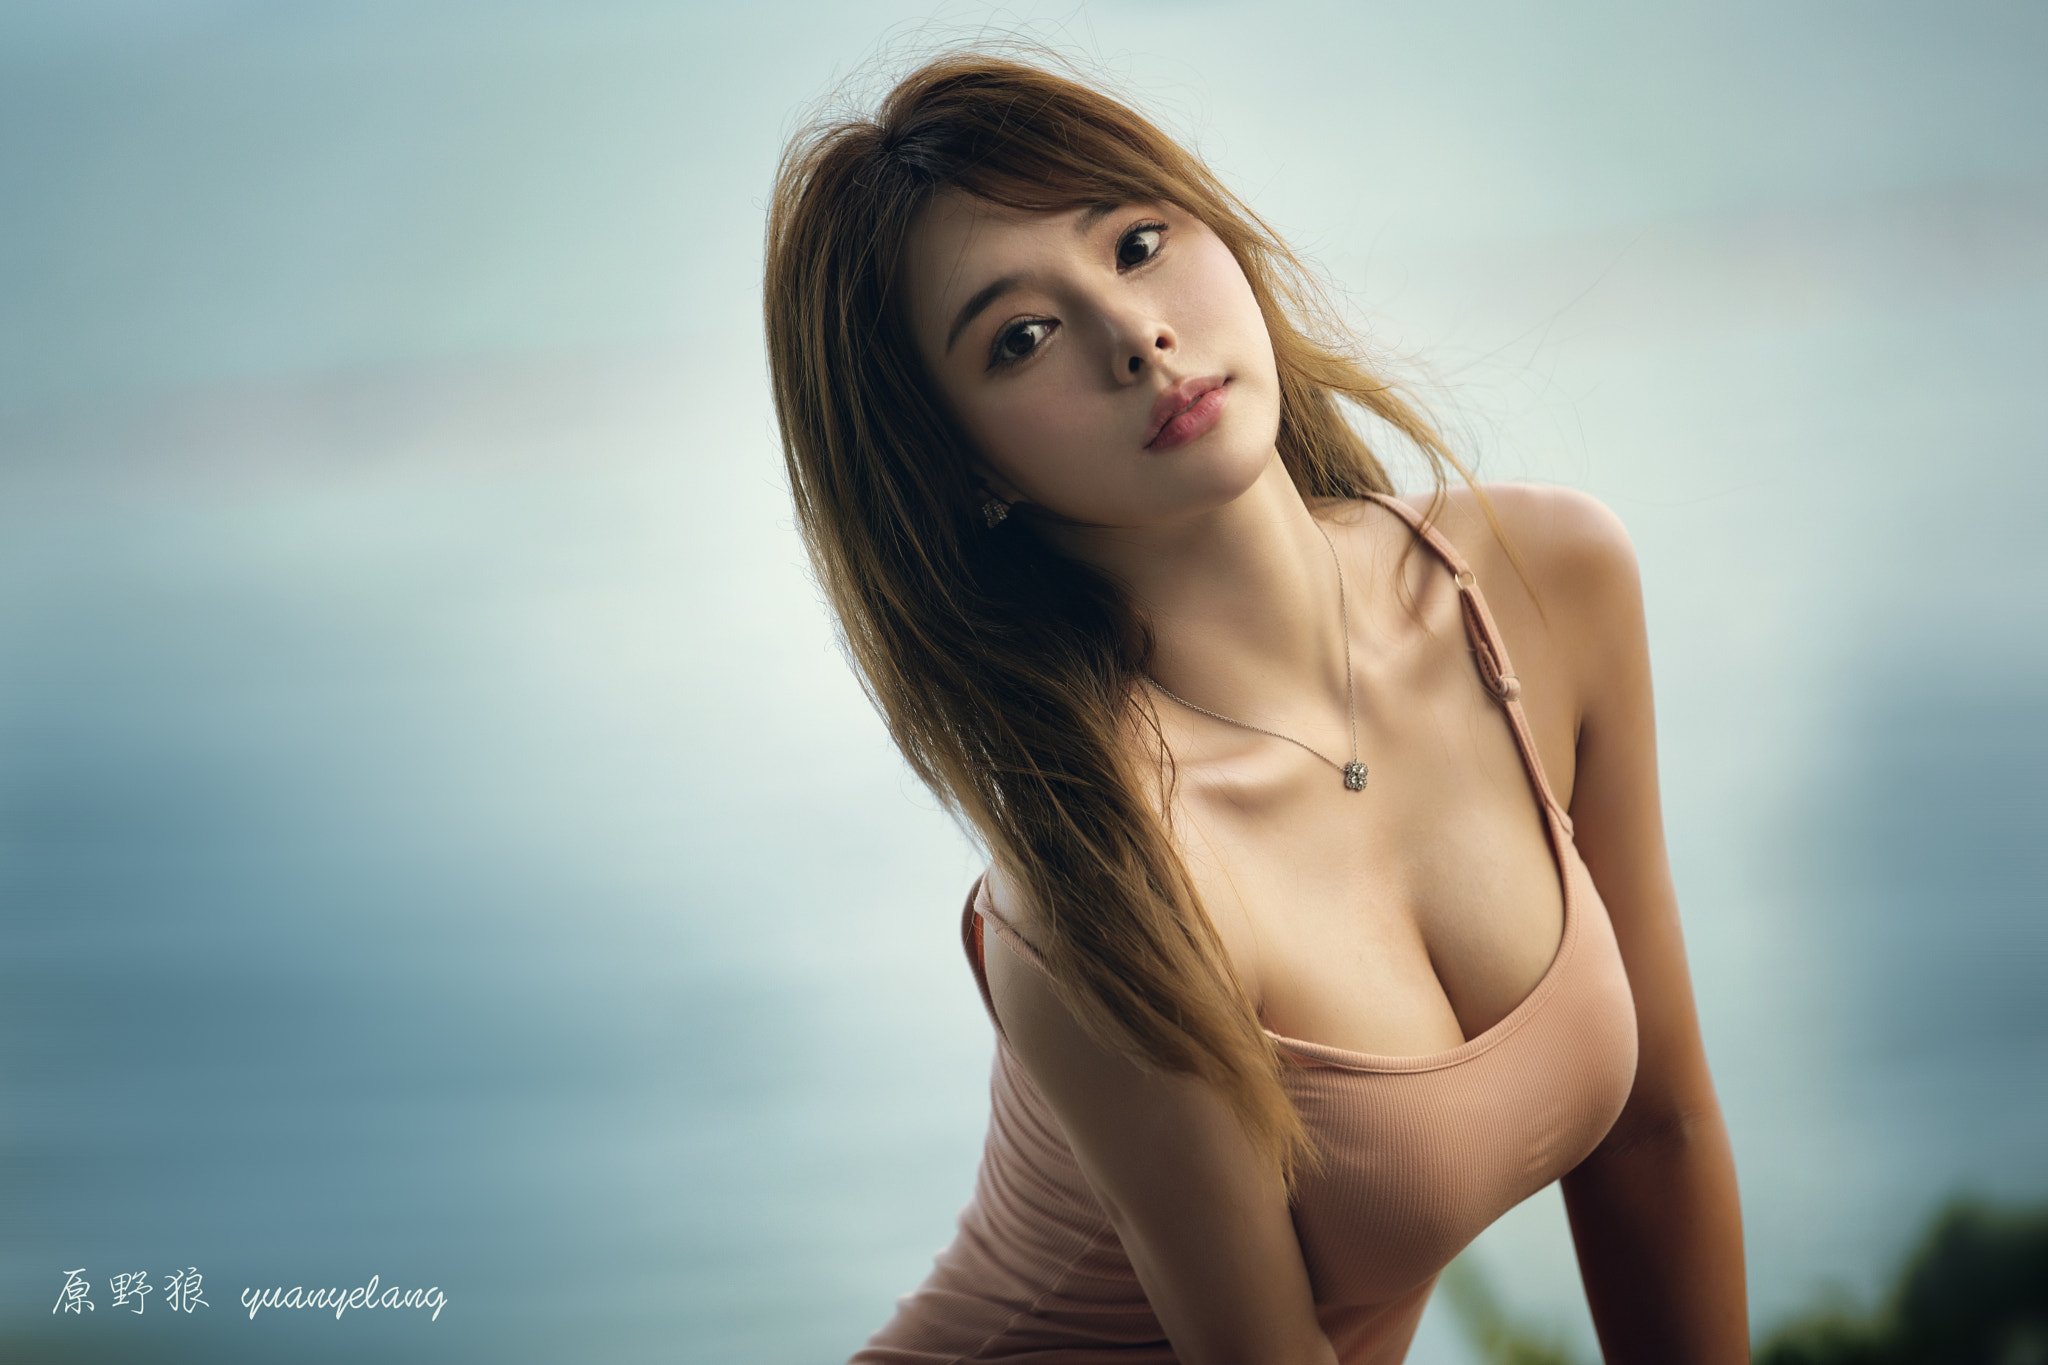 Yuan Yelang Women Asian Brunette Long Hair Tank Top Necklace Depth Of Field Sky Model Women Outdoors 2048x1365